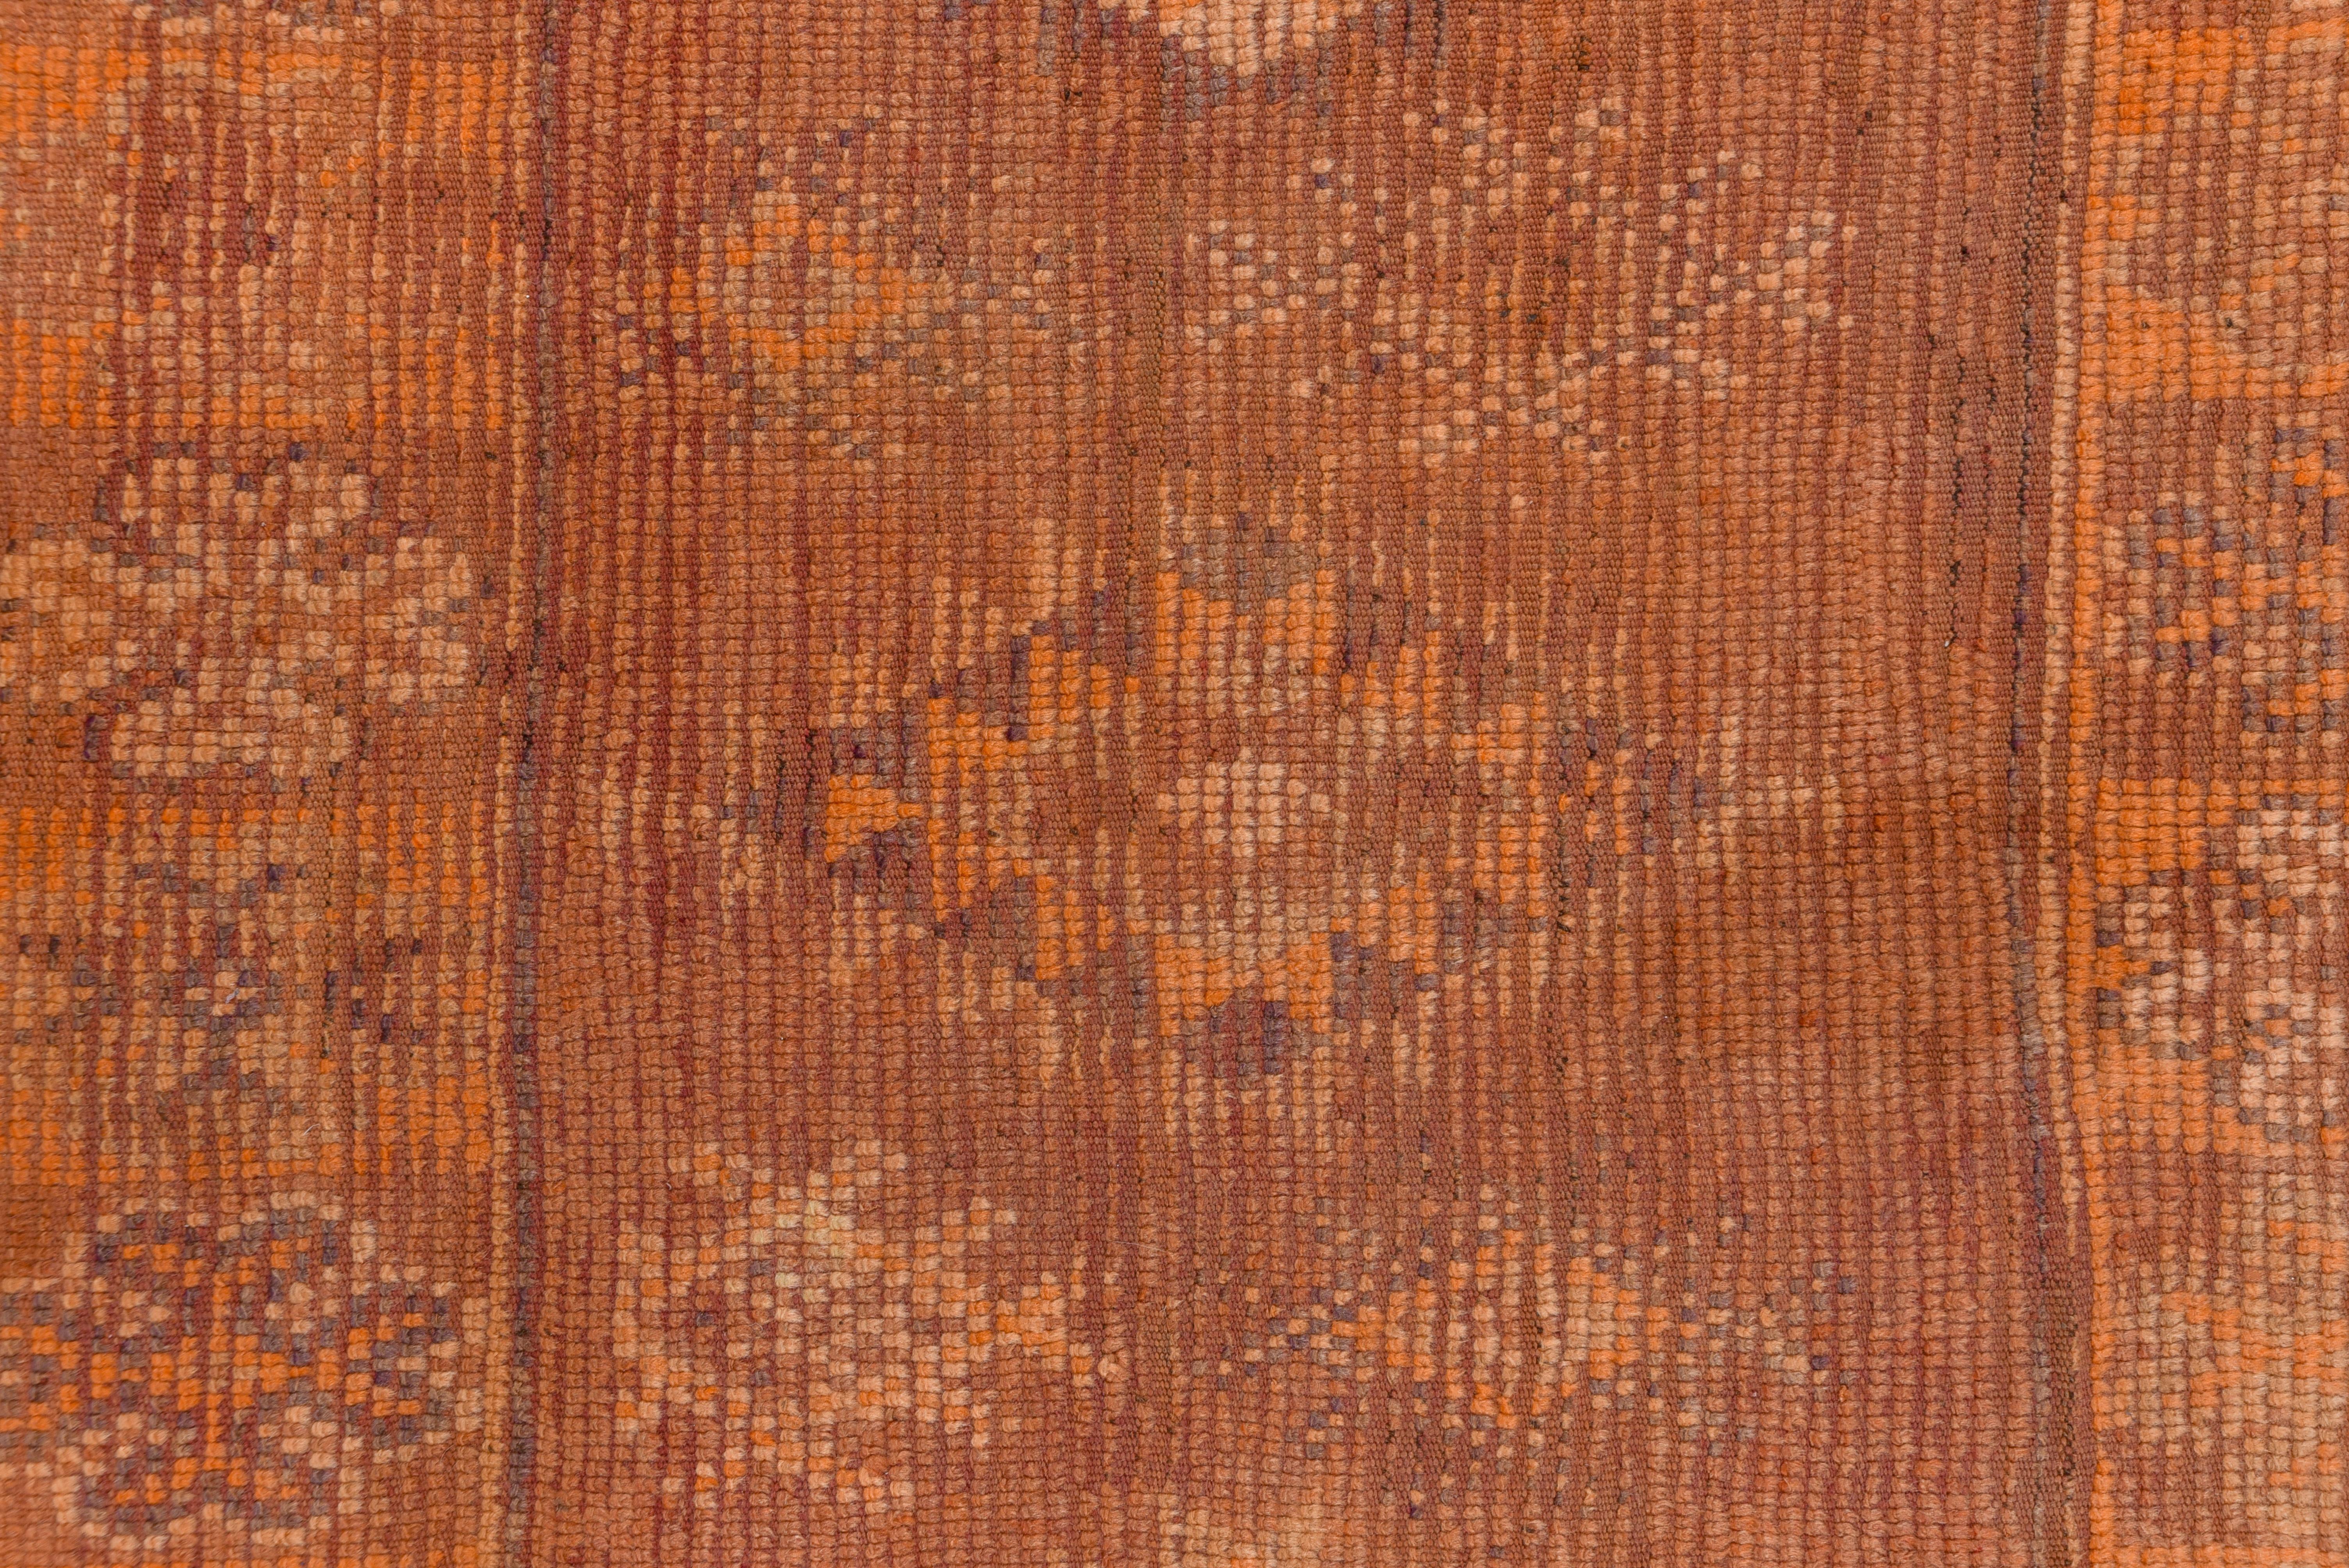 Hand-Knotted Vintage Berber Orange Moroccan Rug, Gallery Rug, Kilim Woven Ends For Sale